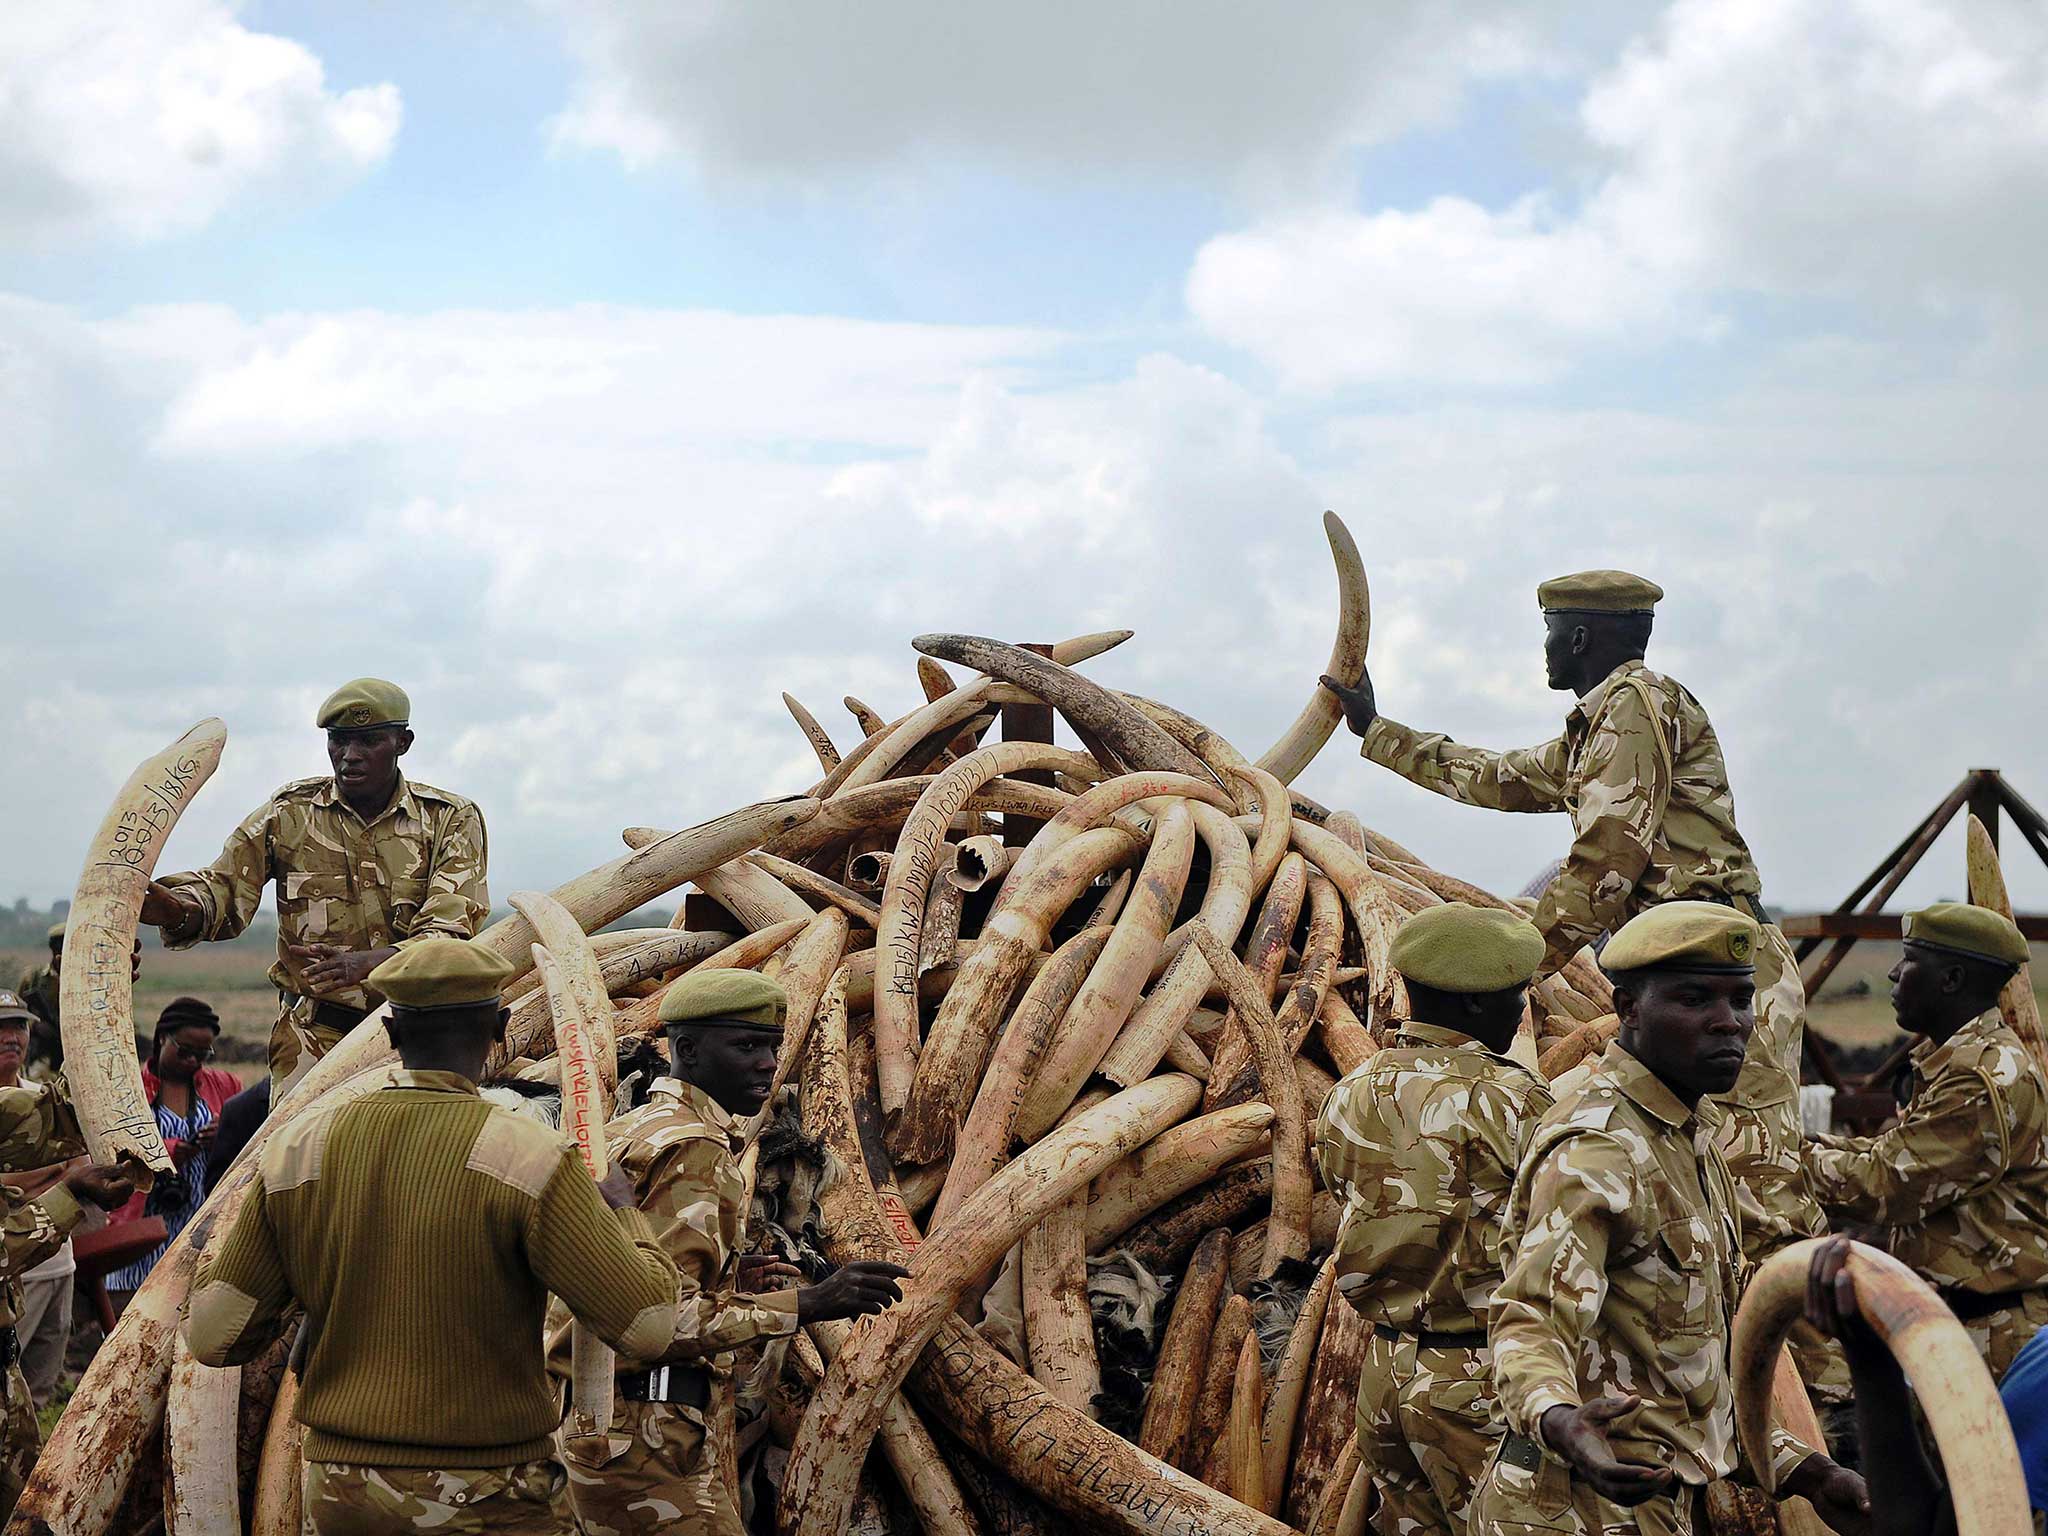 Anti-poaching rangers pile up elephant ivory onto a pyre, at Nairobi's national park